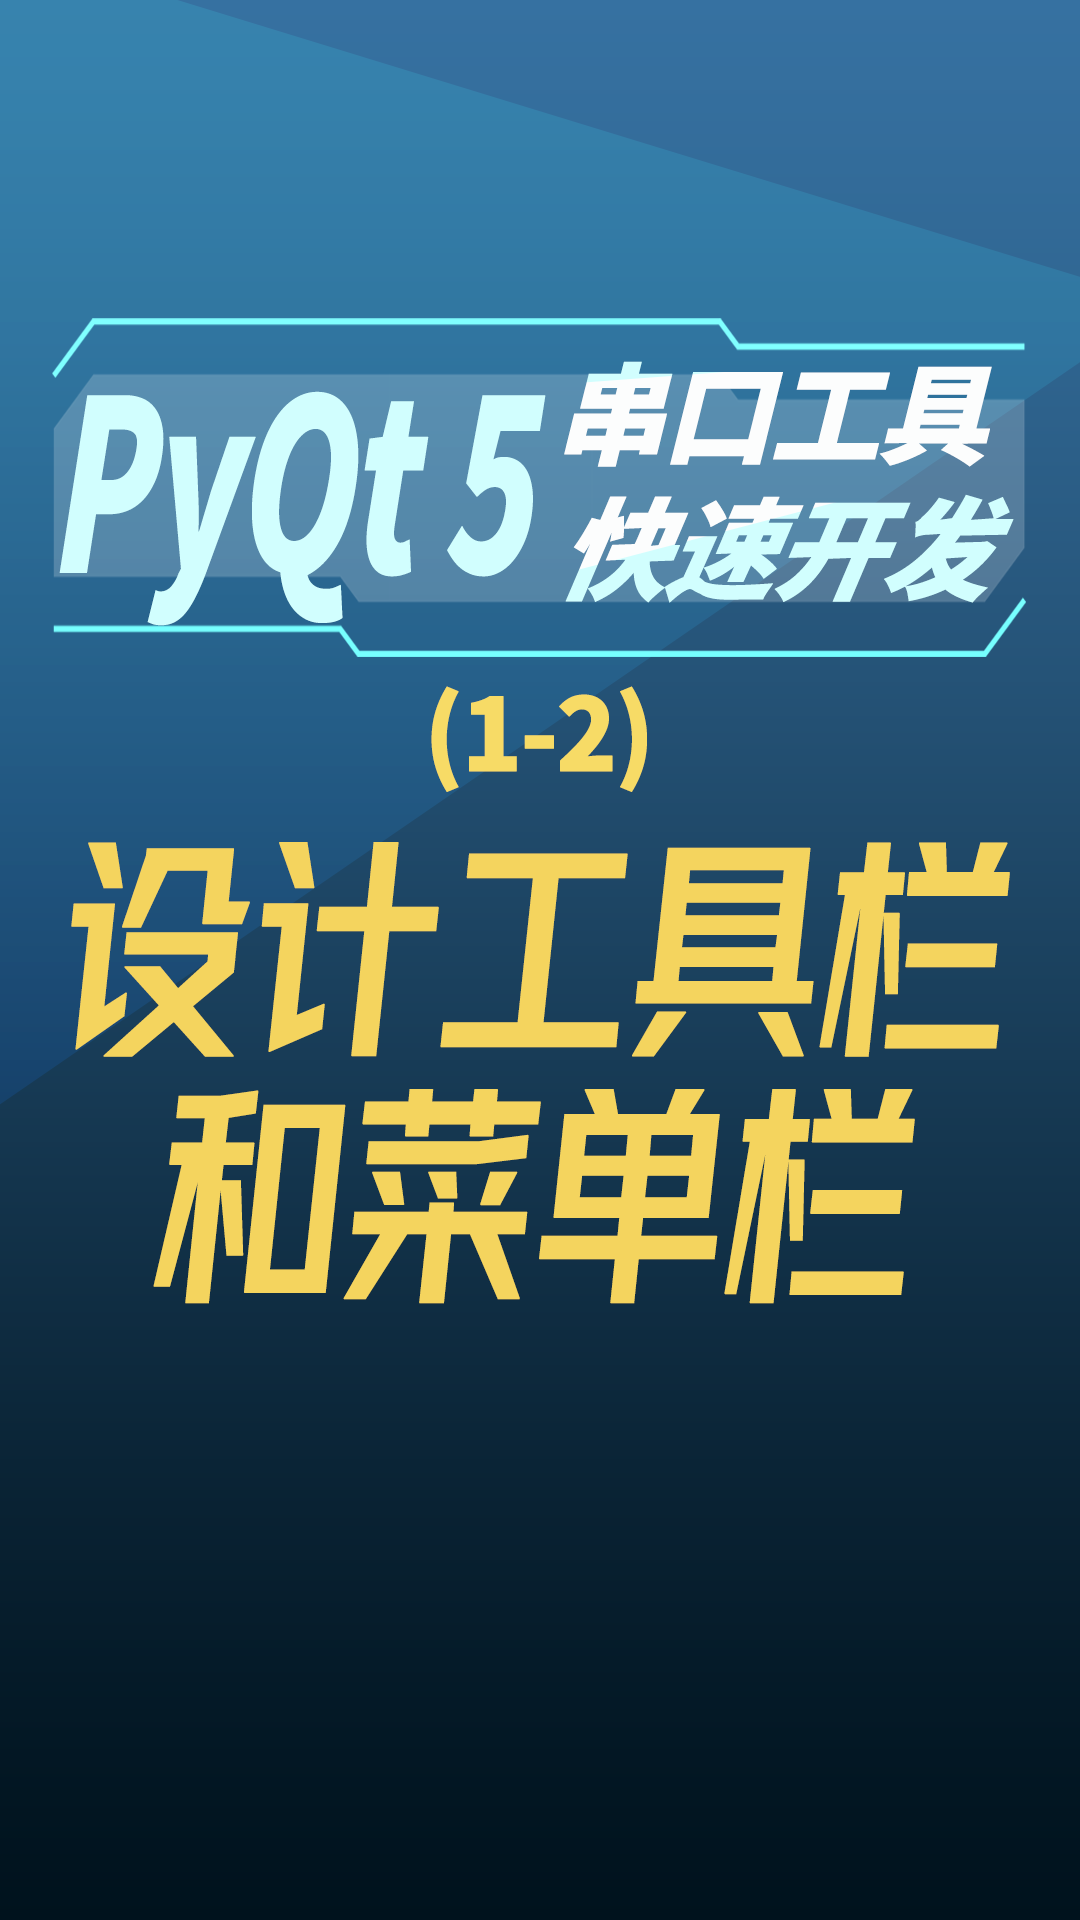 pyqt5串口工具快速开发1-设计工具栏和菜单栏#串口工具开发 